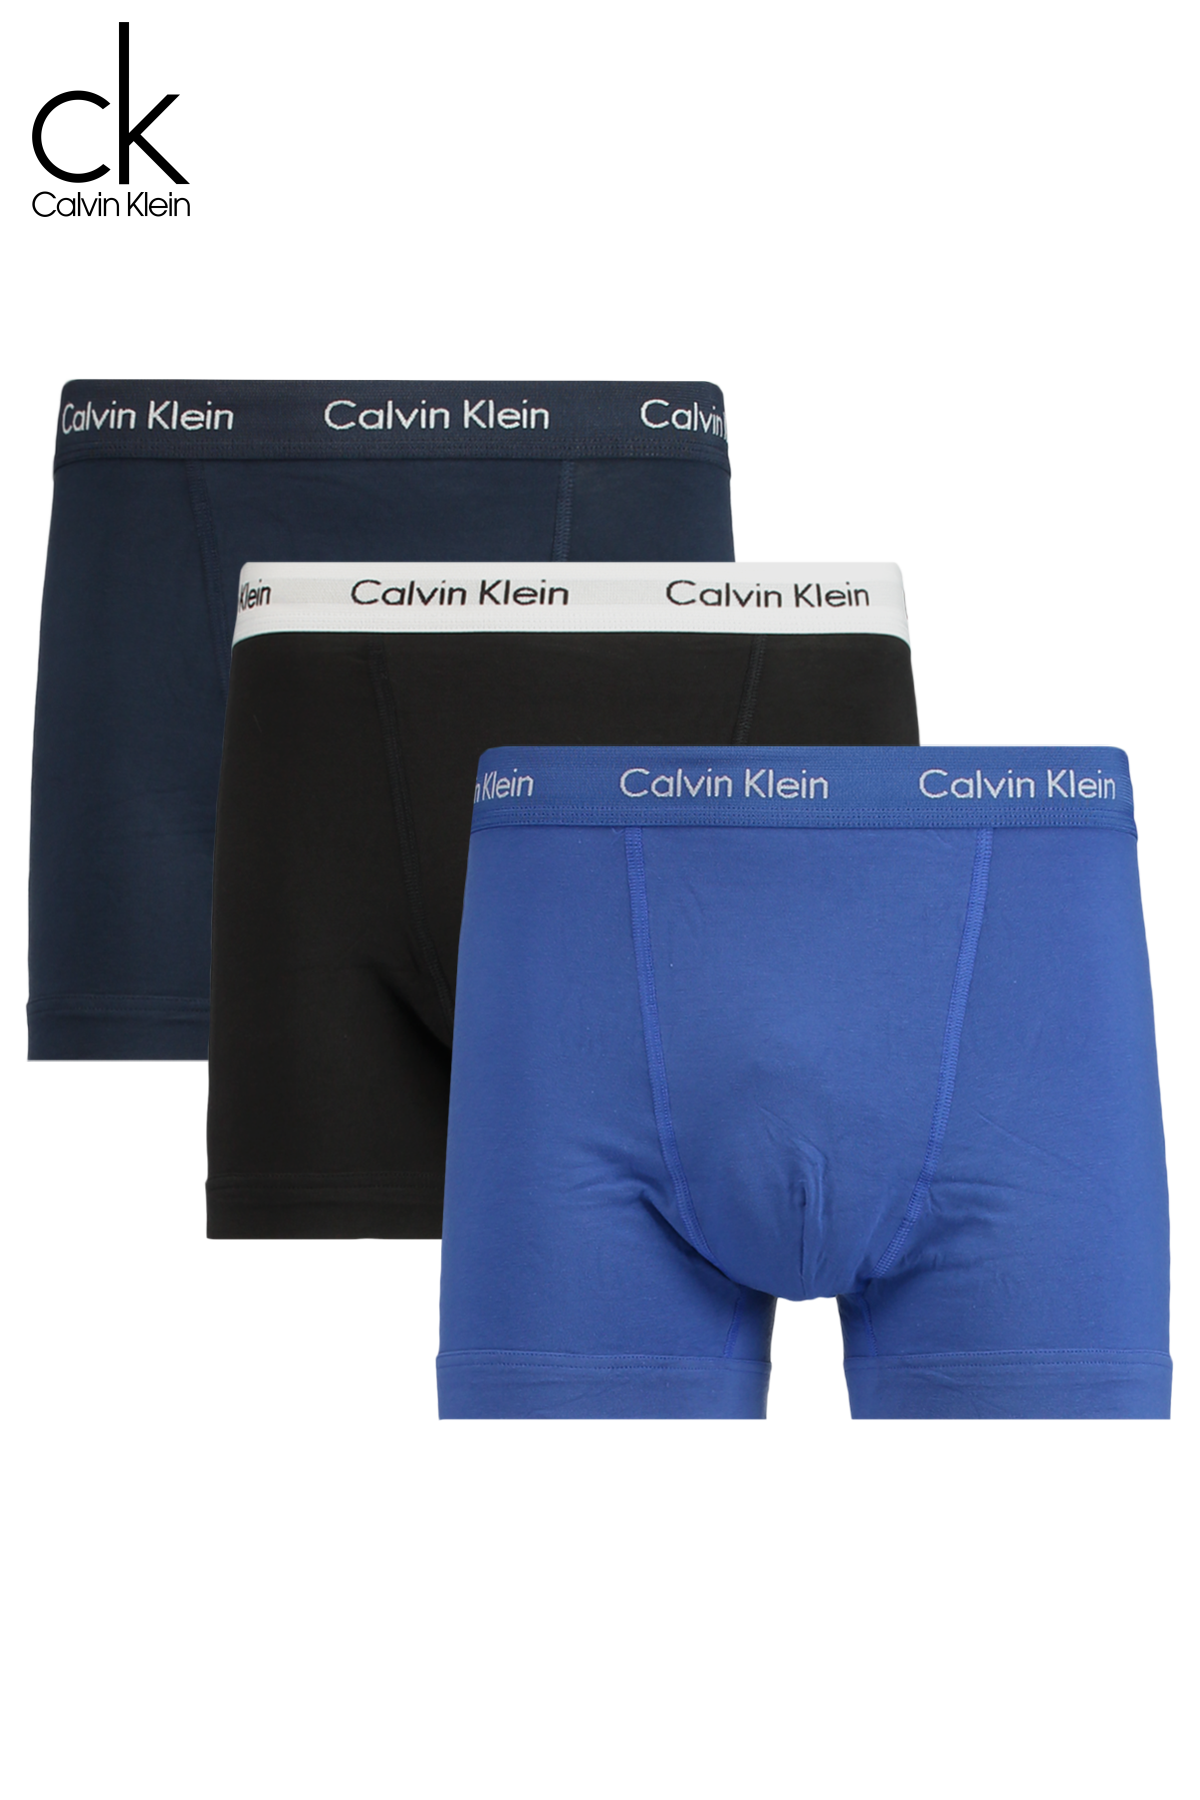 Men Boxershort Calvin Klein 3-pack Black Buy Online